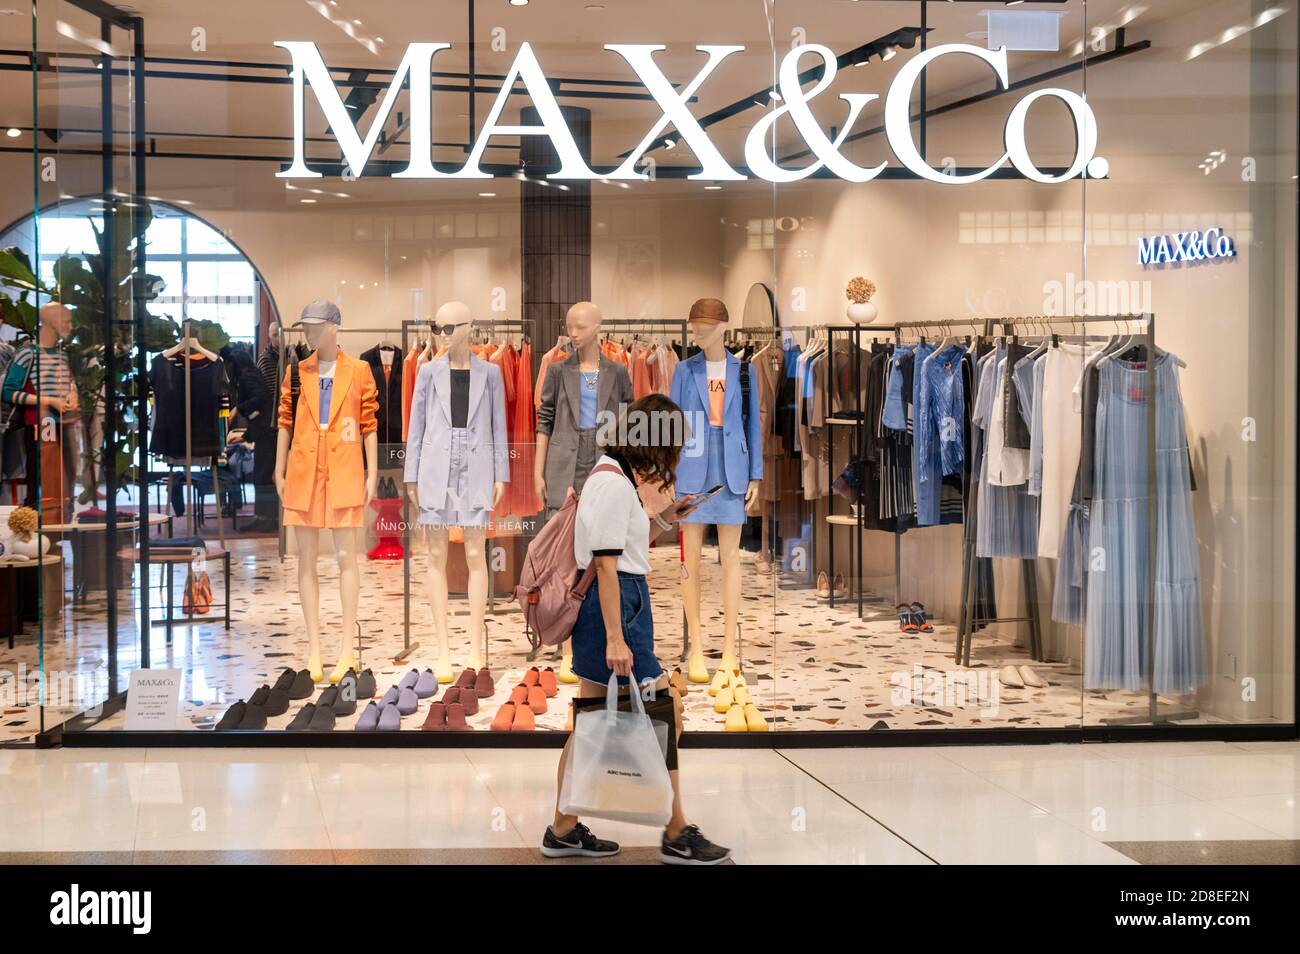 Italian fashion brand Max & Co store seen in Hong Kong Stock Photo ...